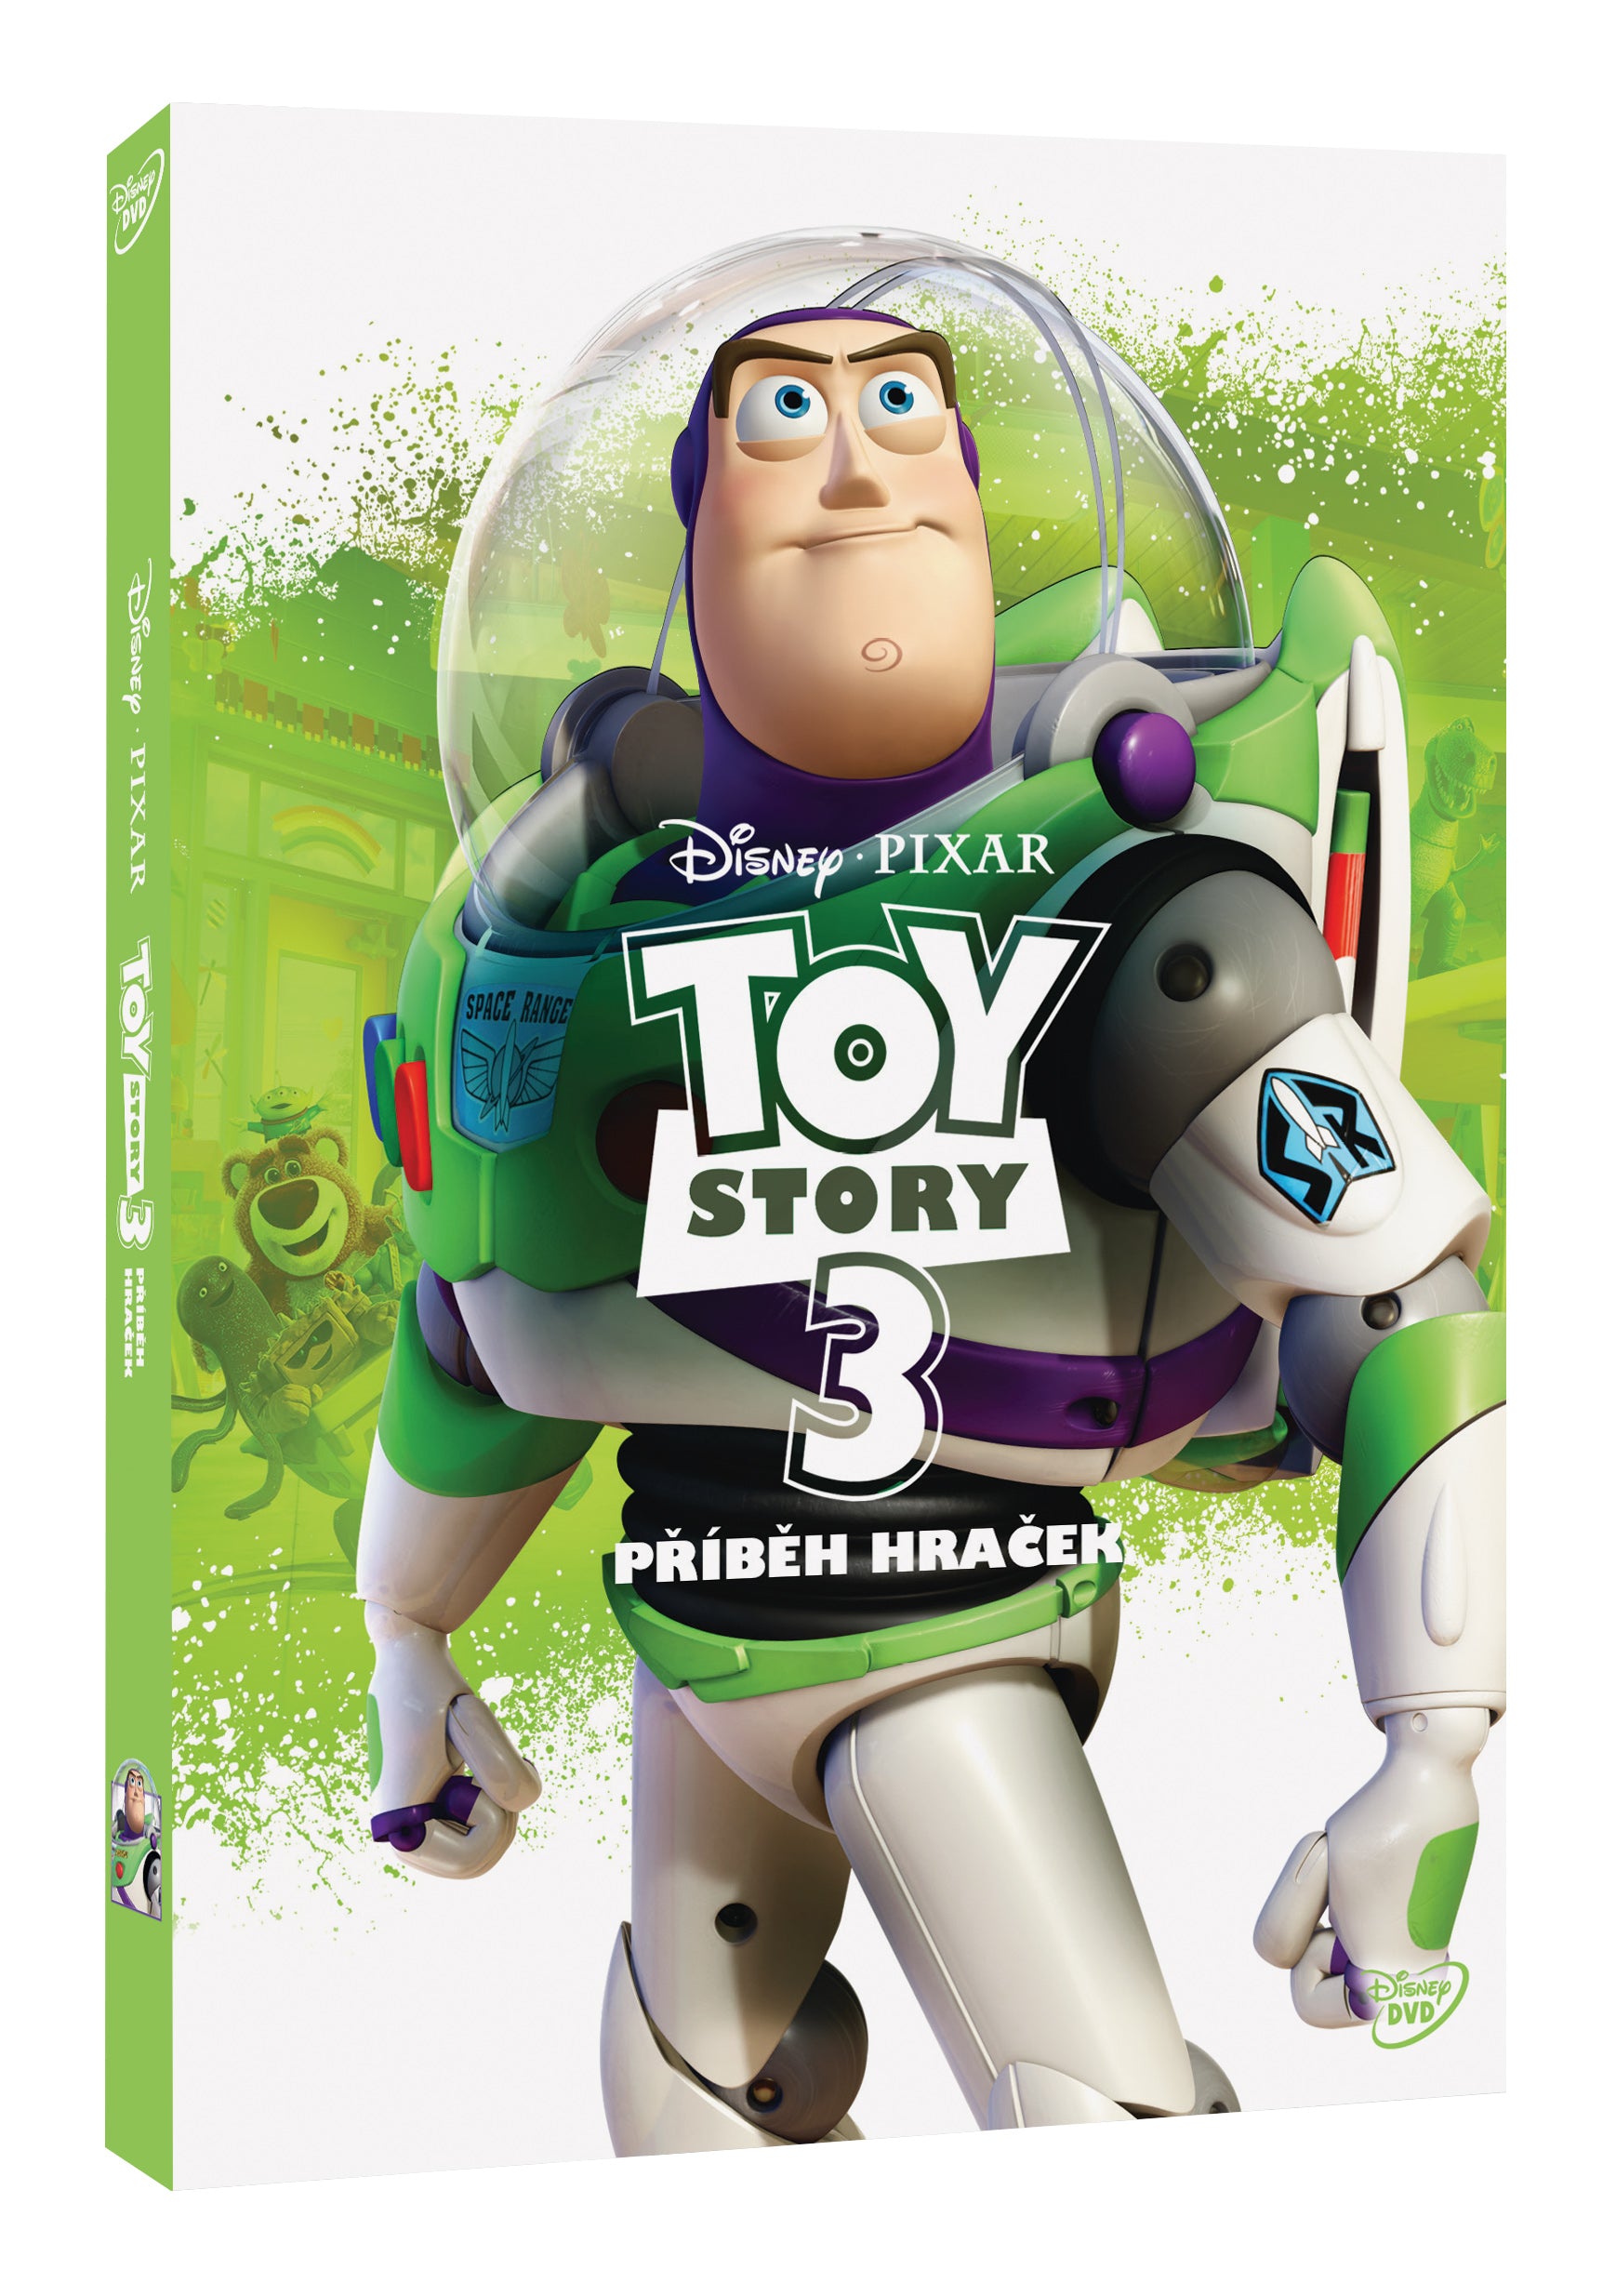 Toy Story 3: Pribeh hracek DVD - Edice Pixar New Line / Toy story 3